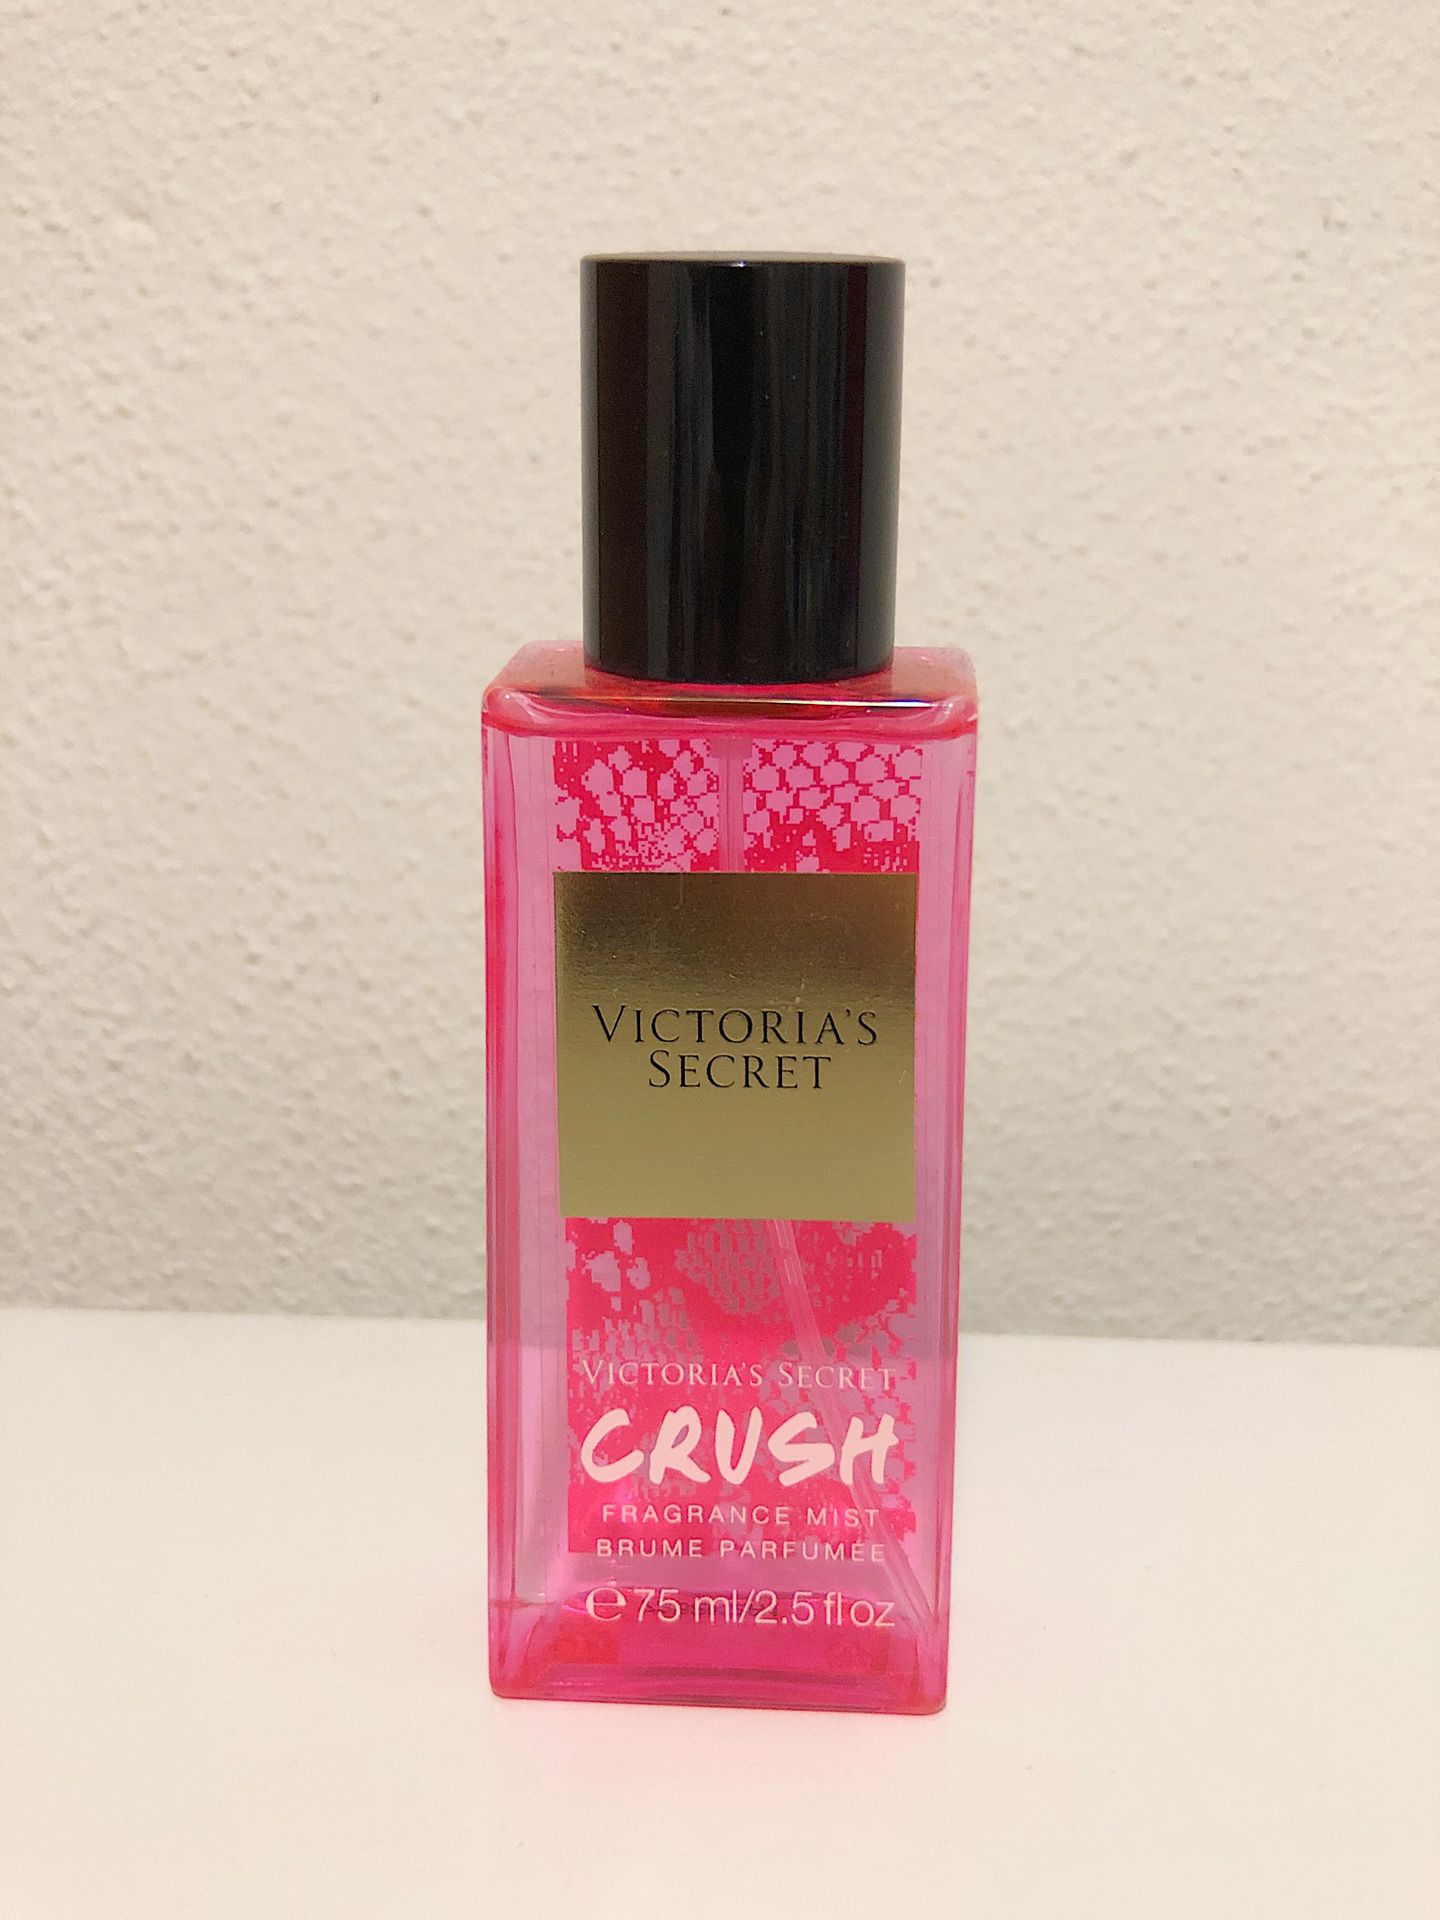 Victoria’s Secret crush fragrance body mist spray mini size